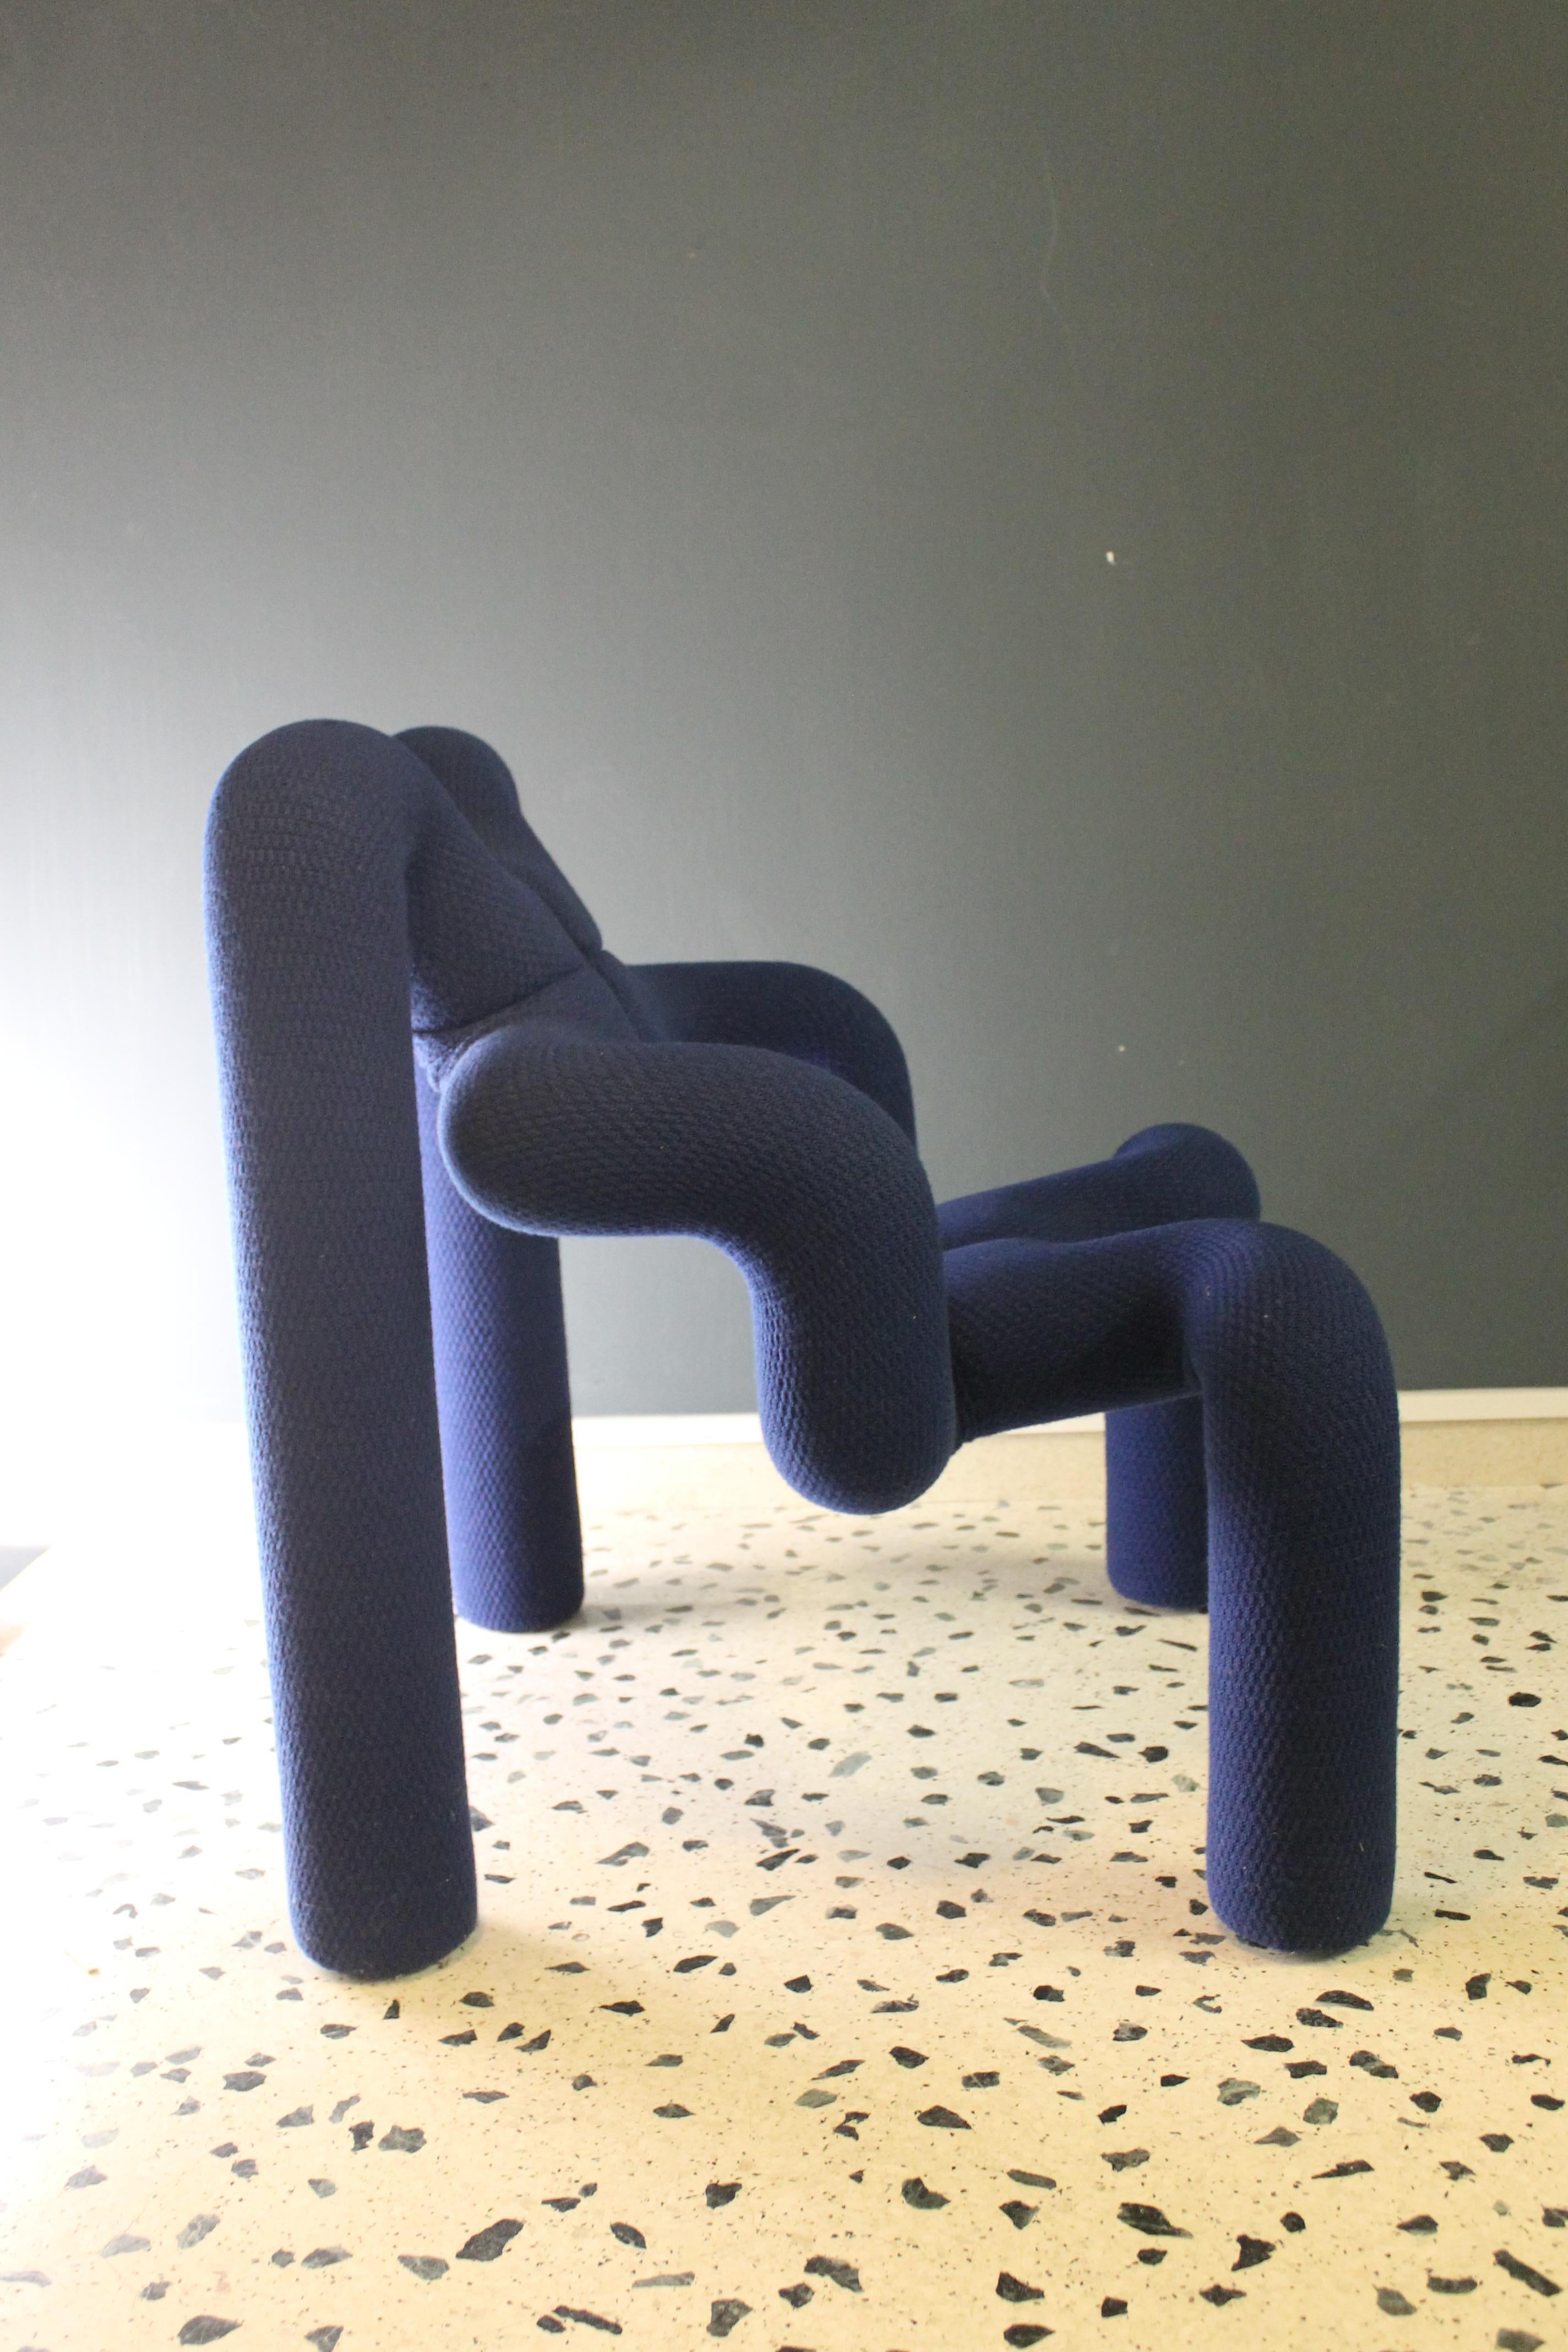 Armchair model 'Extreme' Terje Ekstrøm (1944-2013) upholstered in blue wool. Designed in 1972. Manufactured by Stokke.